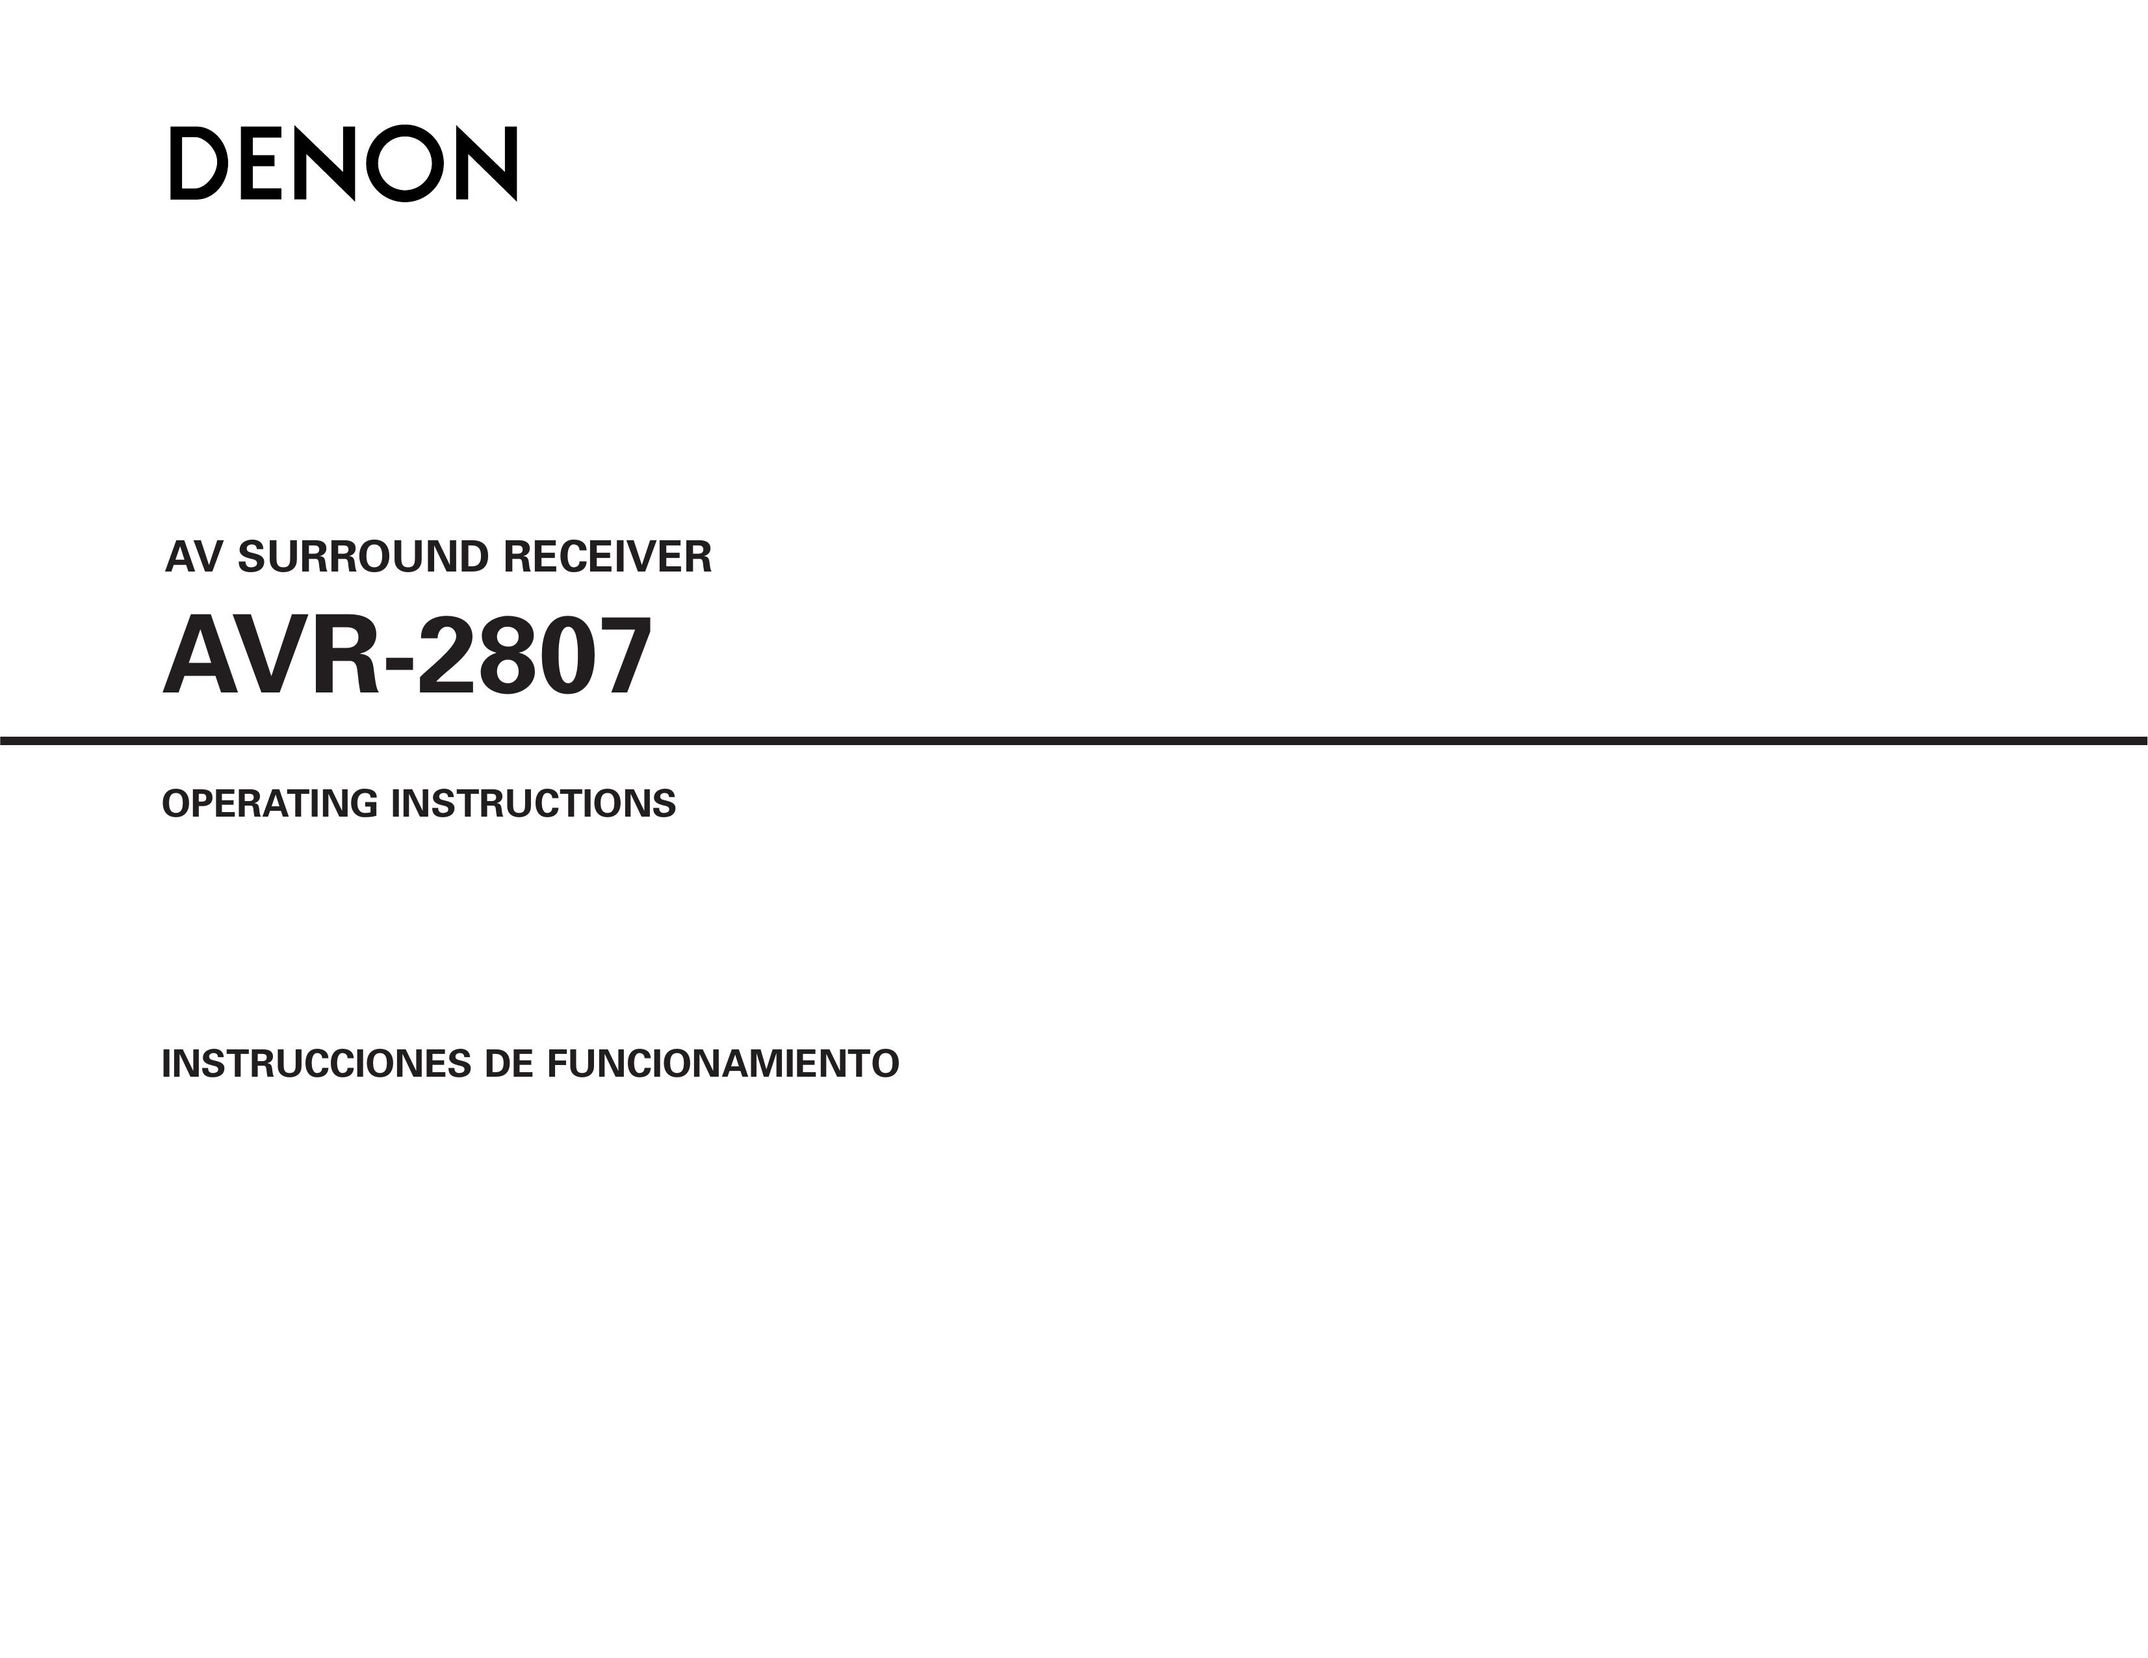 Denon AVR-2807 Stereo Receiver User Manual